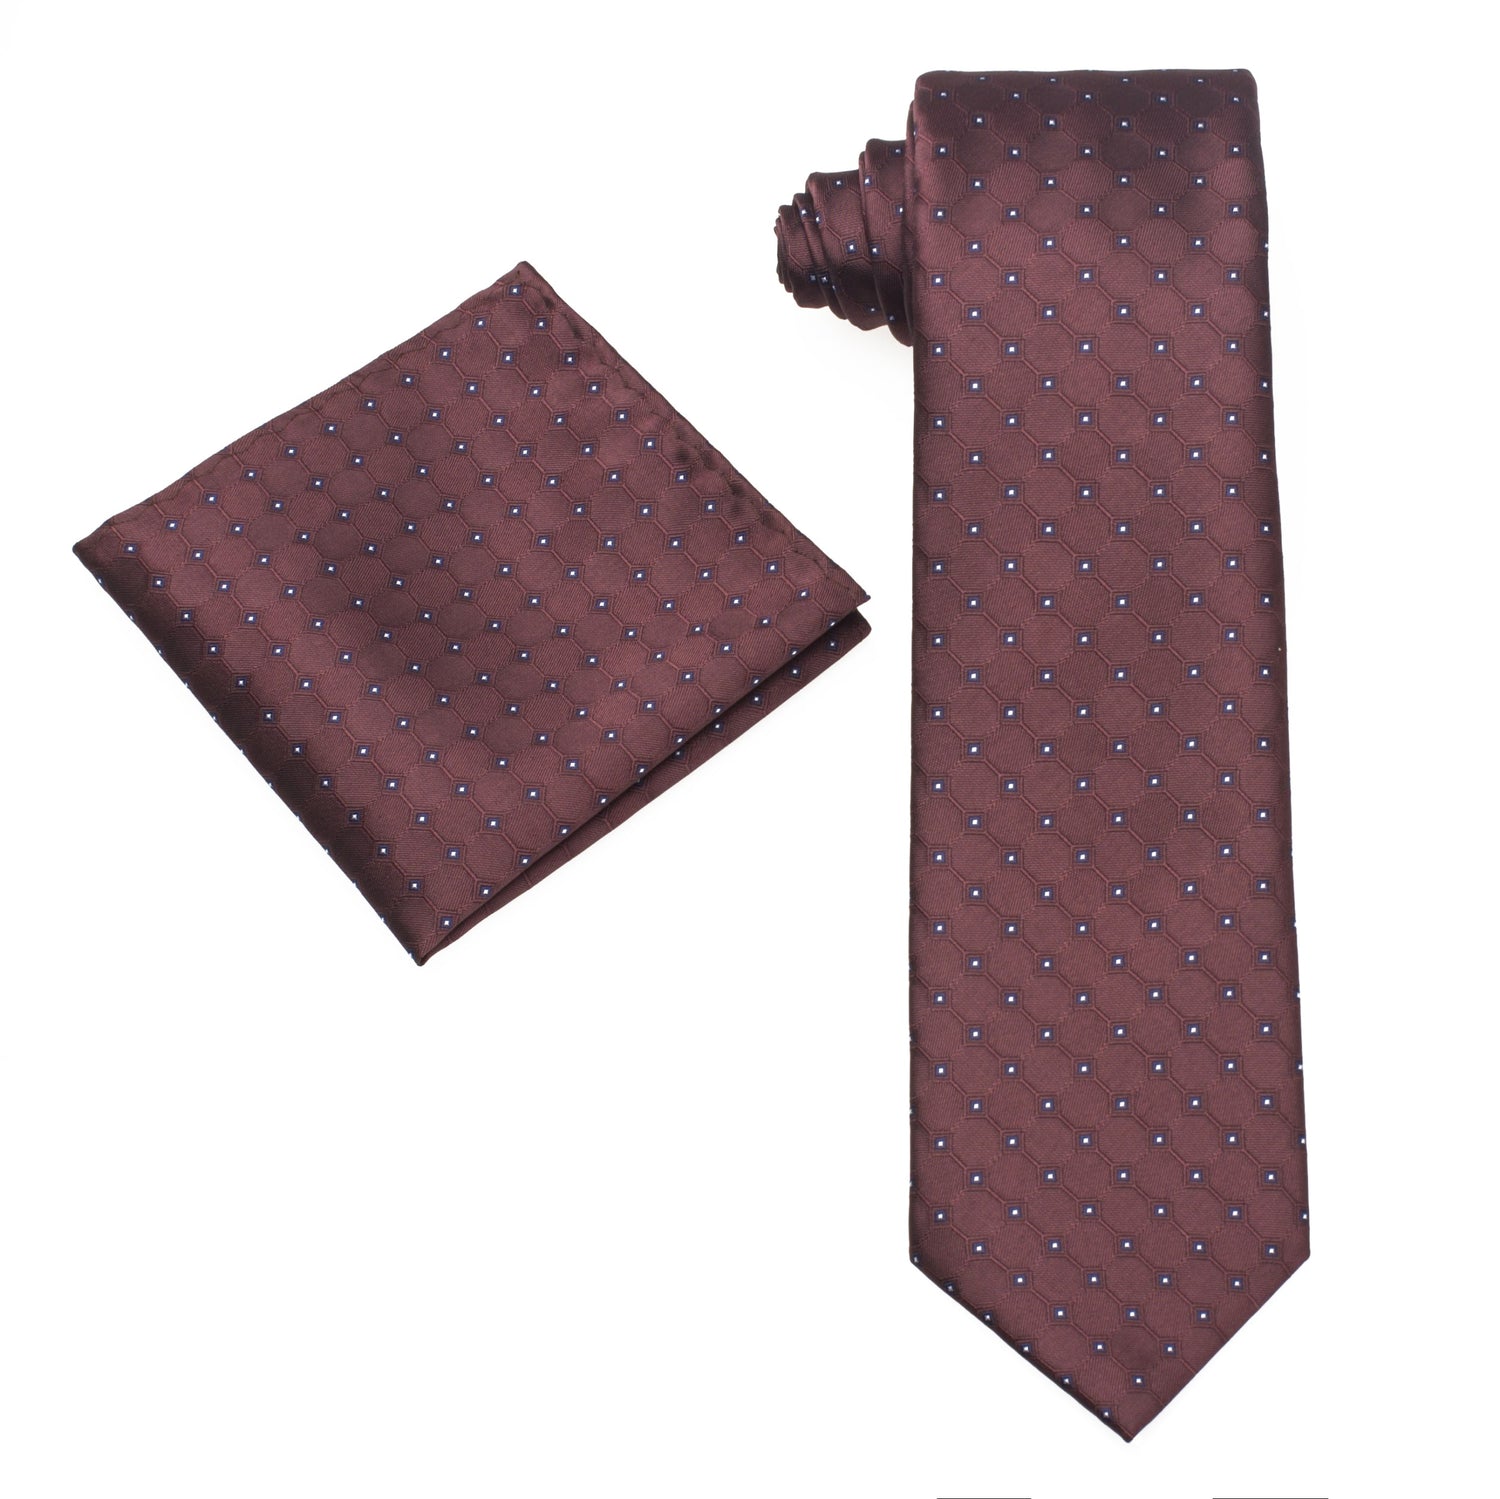 Alt View: A Brown, Black, White Geometric Texture With Small Black, White Checks Silk Necktie, Pocket Square